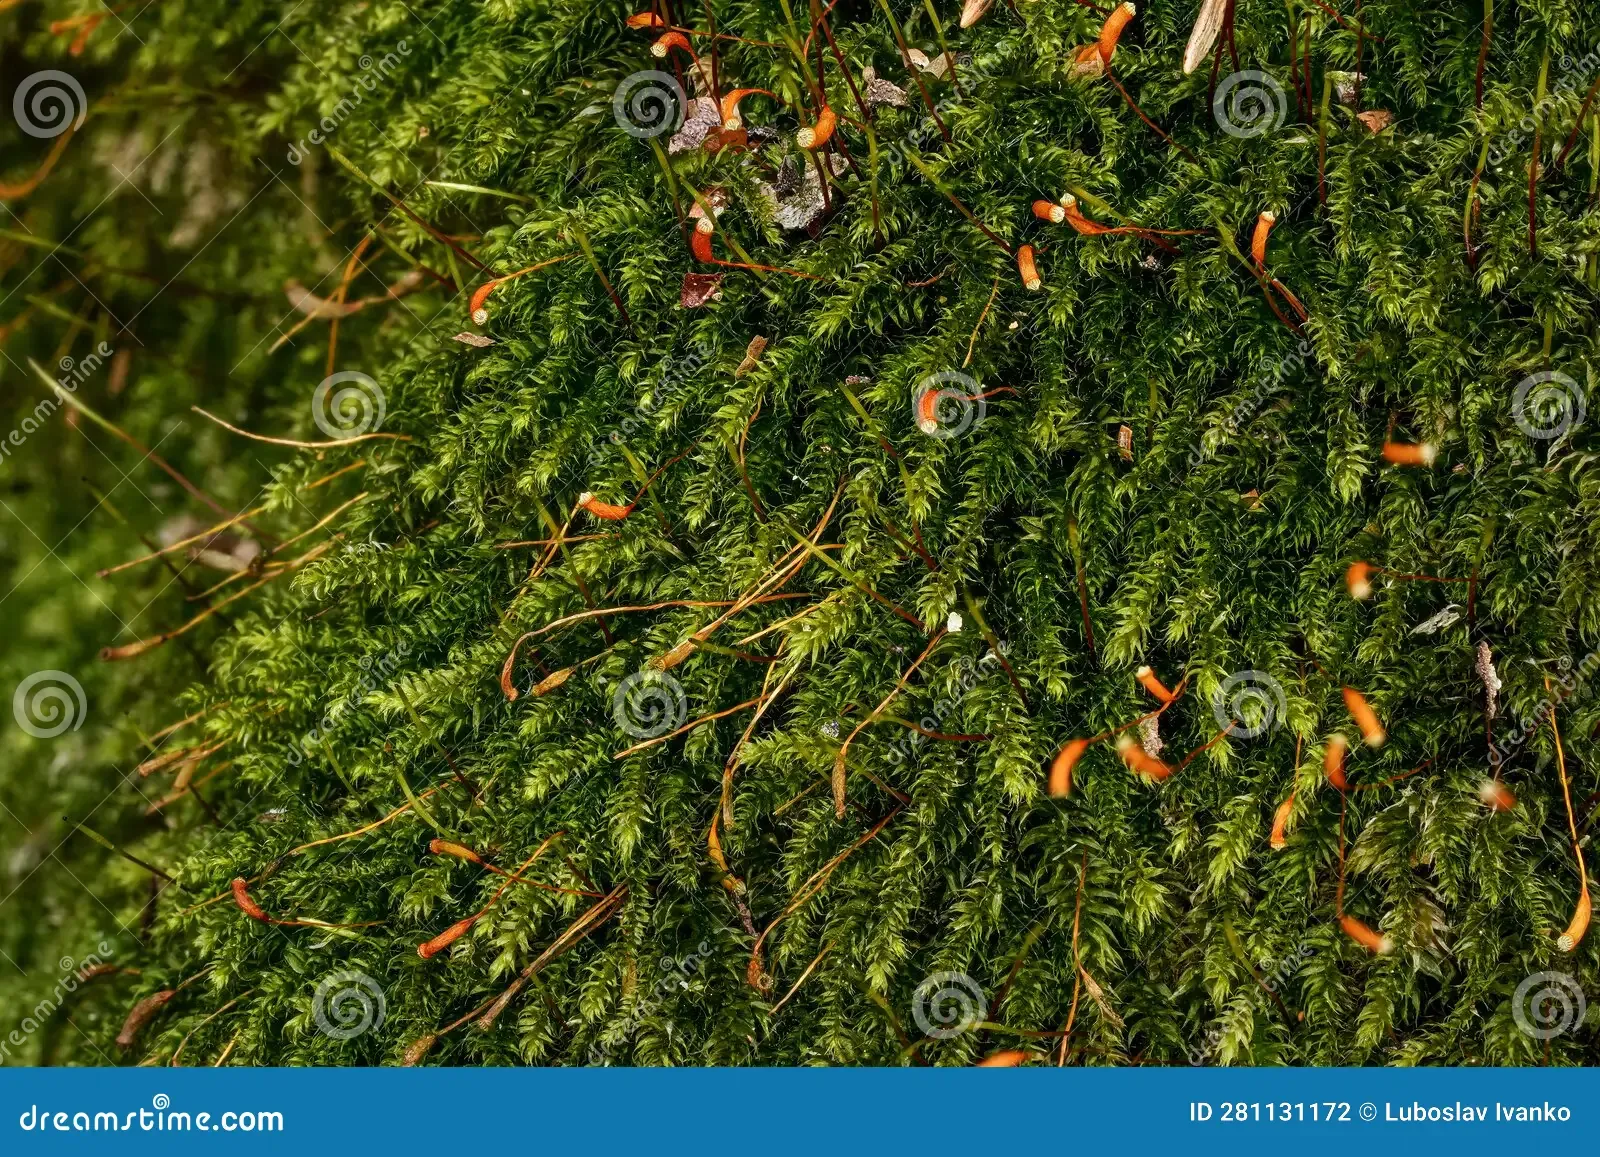 fine-green-moss-brachythecium-species-growing-tree-closeup-macro-detail-281131172.jpg